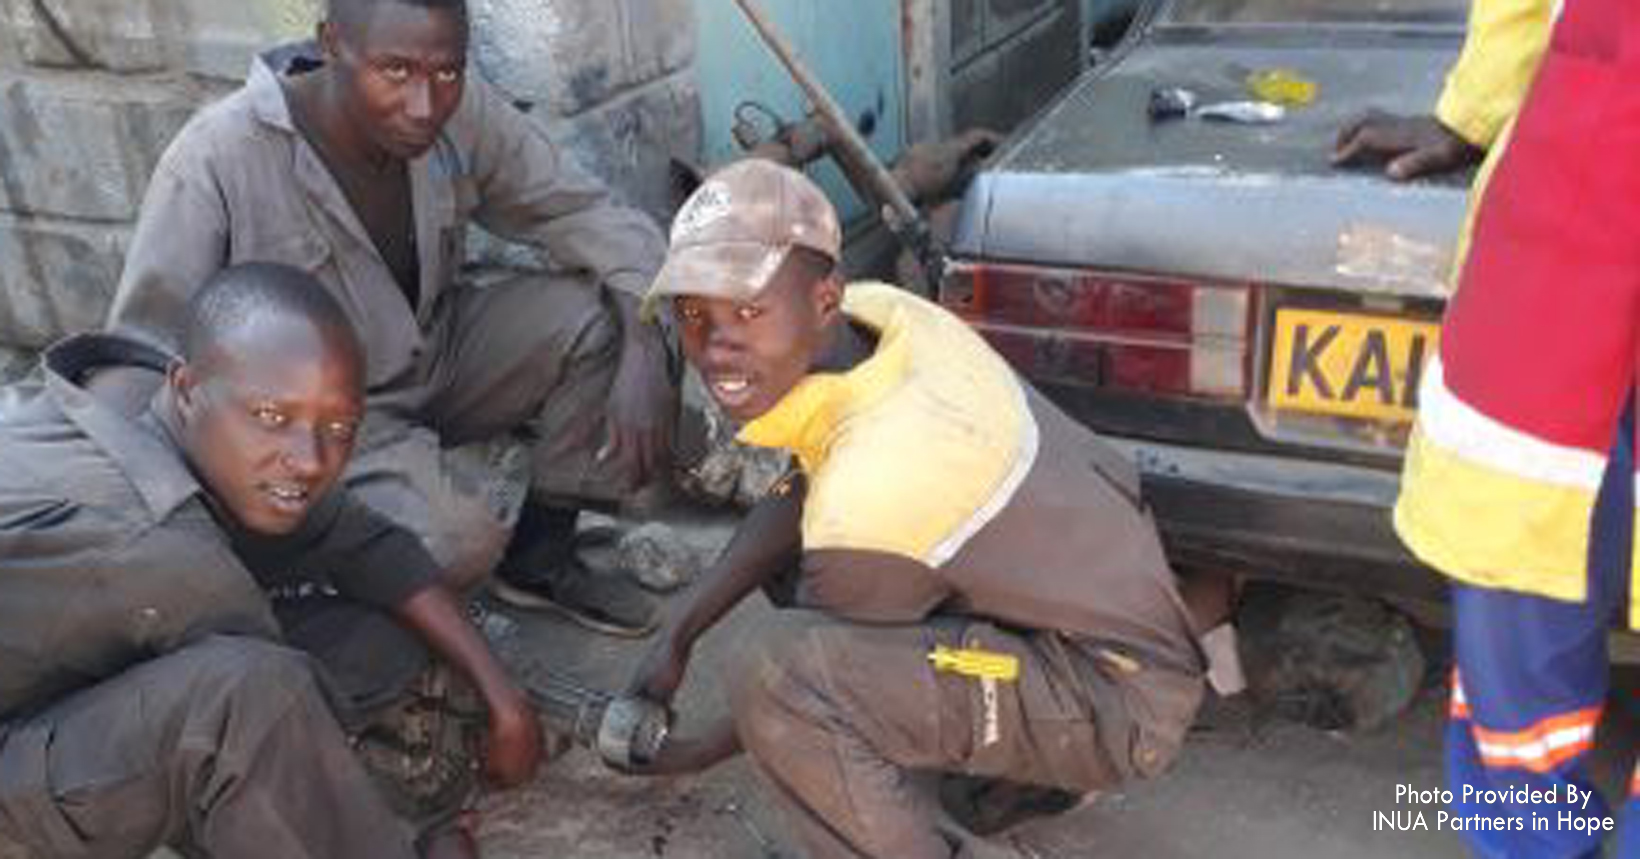 Three men work on repairing a car.